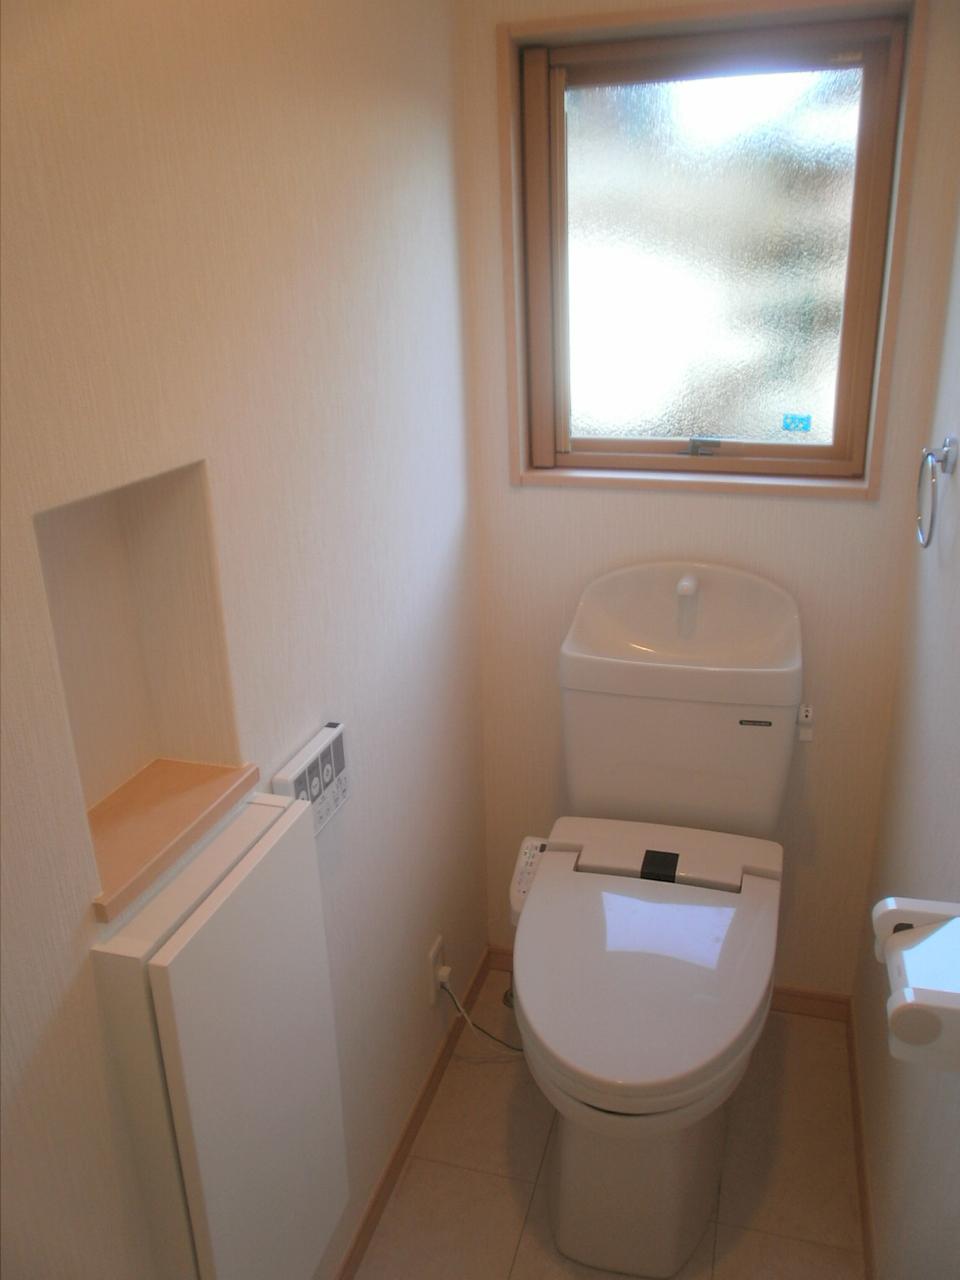 Toilet. First floor toilet (December 2013) Shooting